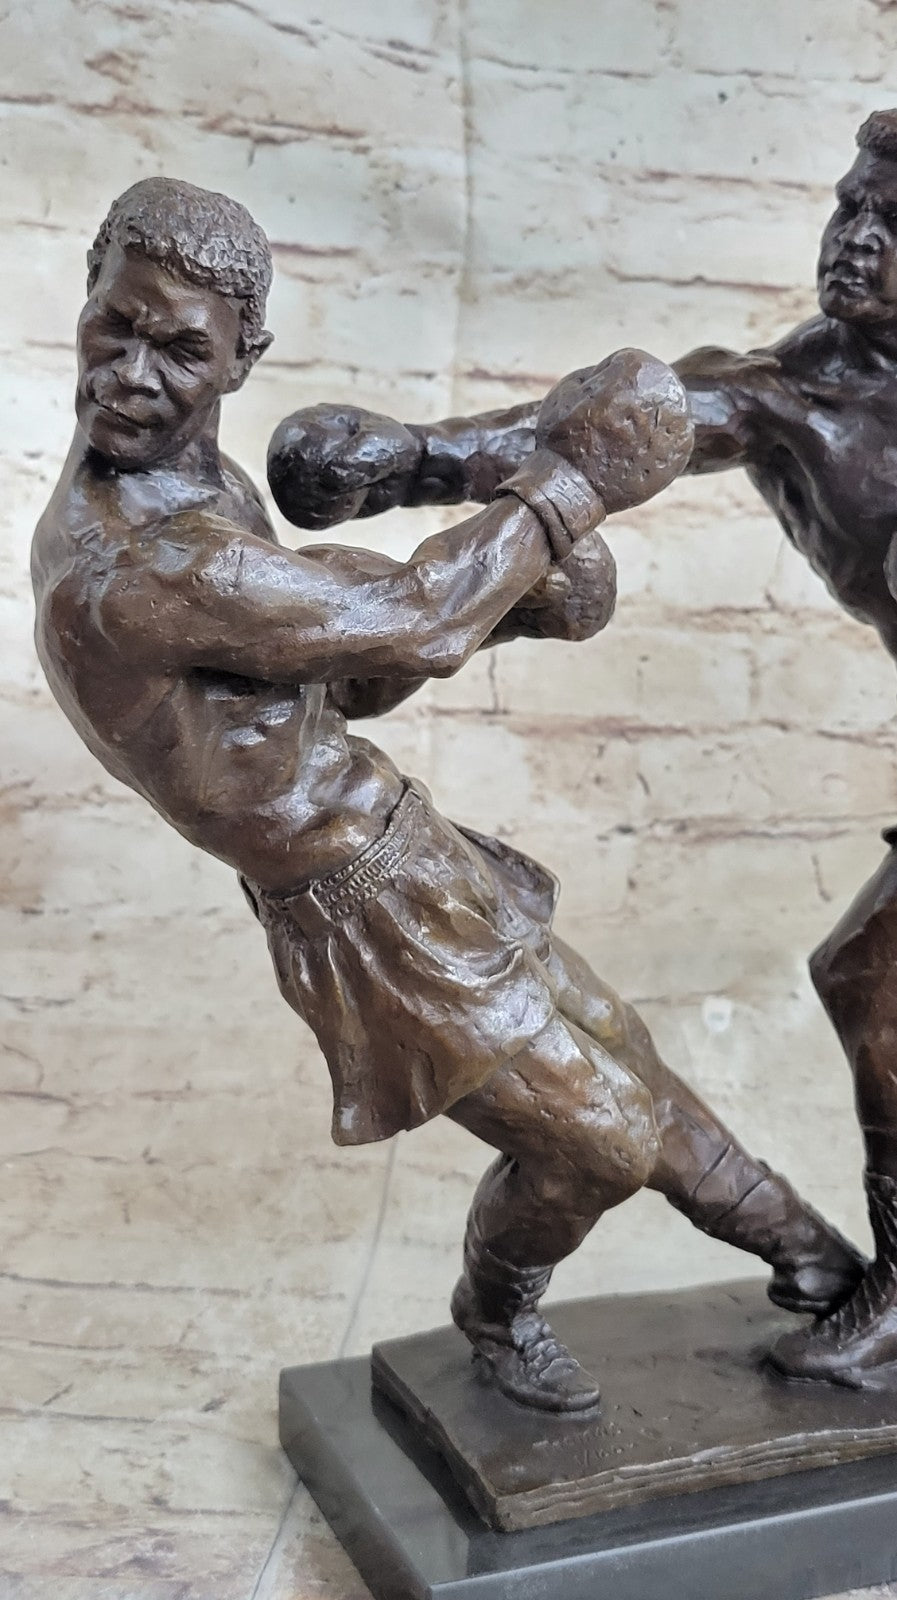 Boxing Ring Side Fighting Decor Bronze Sculpture Statue Figurine Figure Sale Art